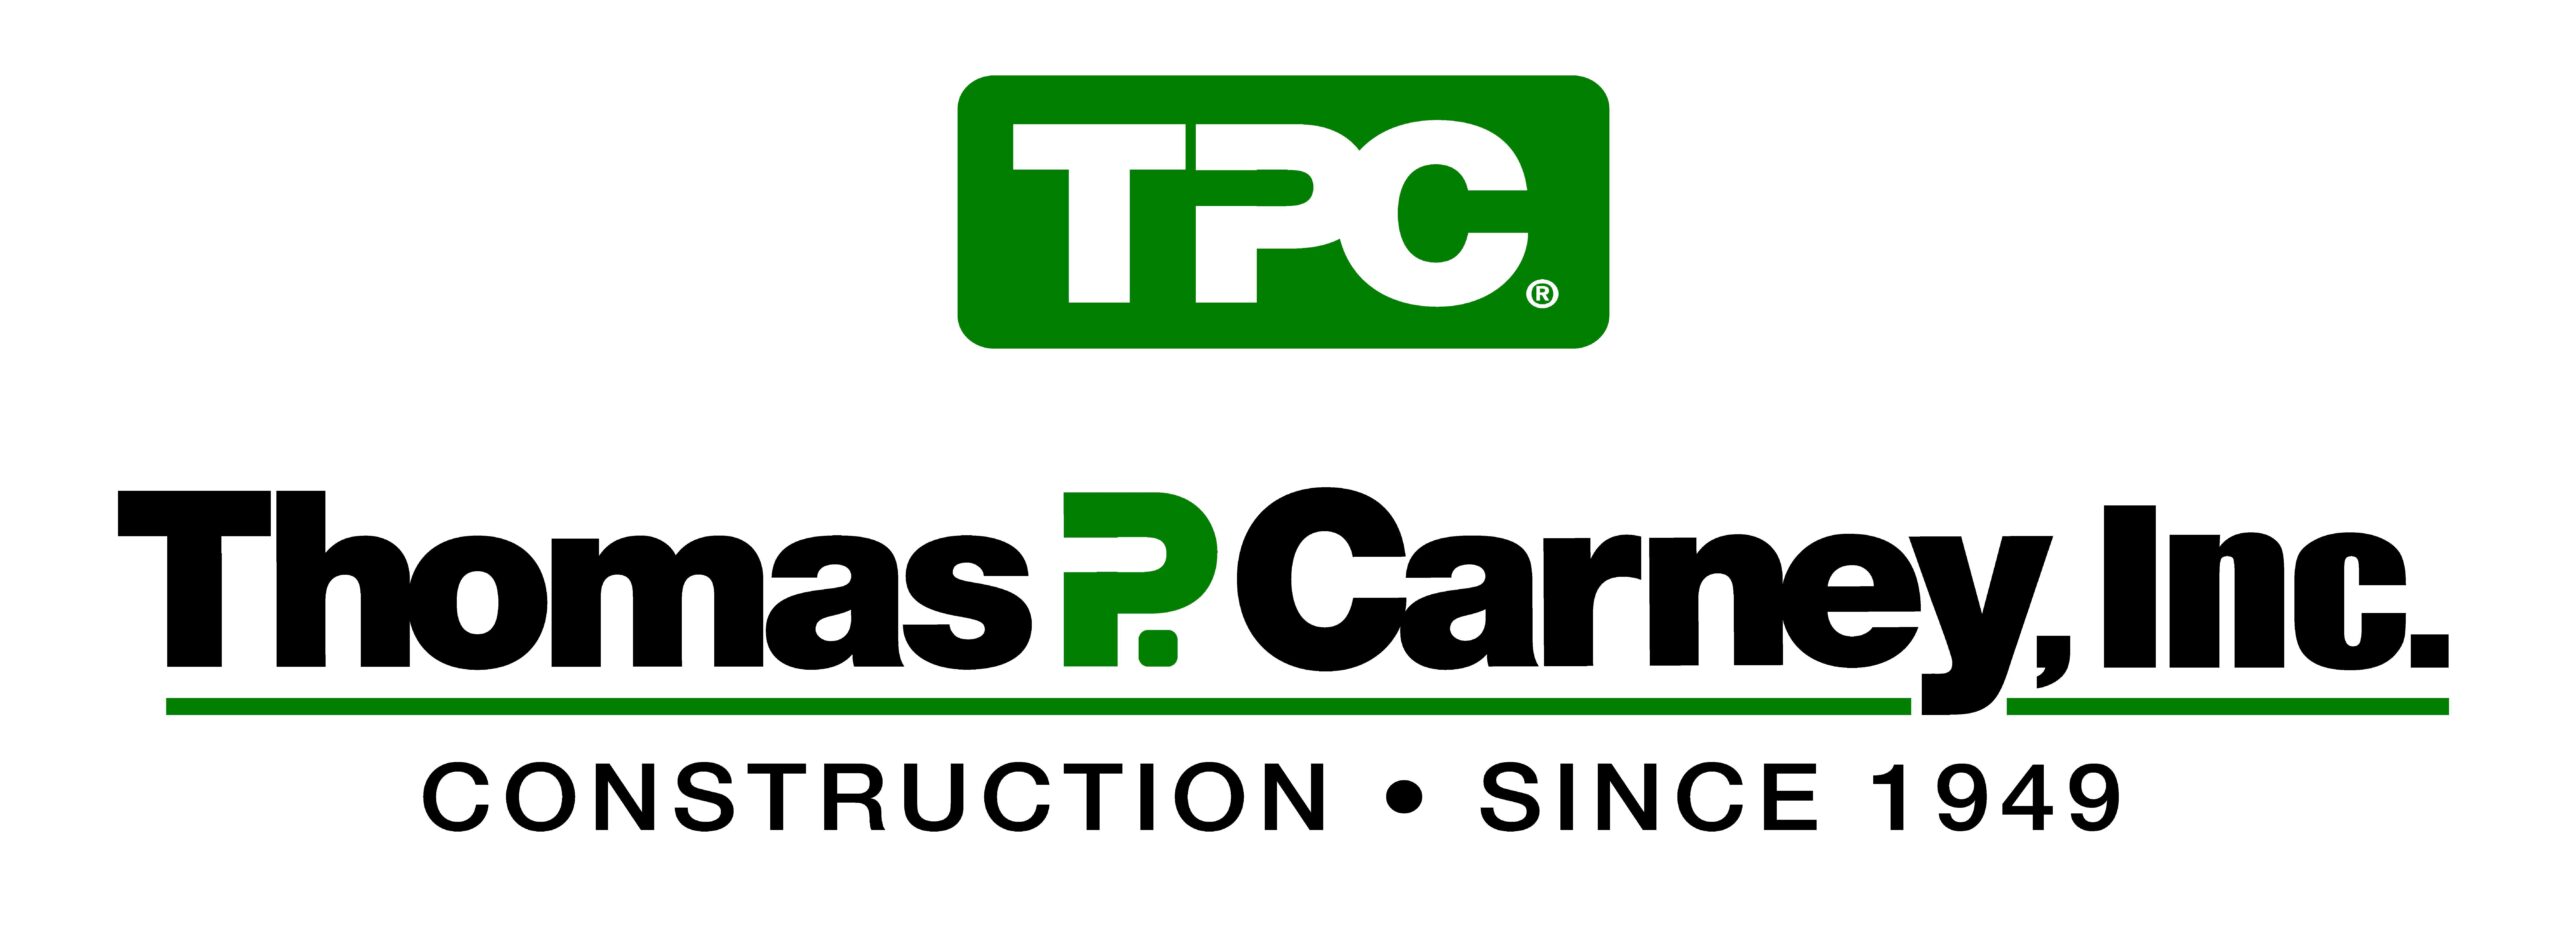 Thomas P. Carney Construction - Since 1949 - Langhorne, PA